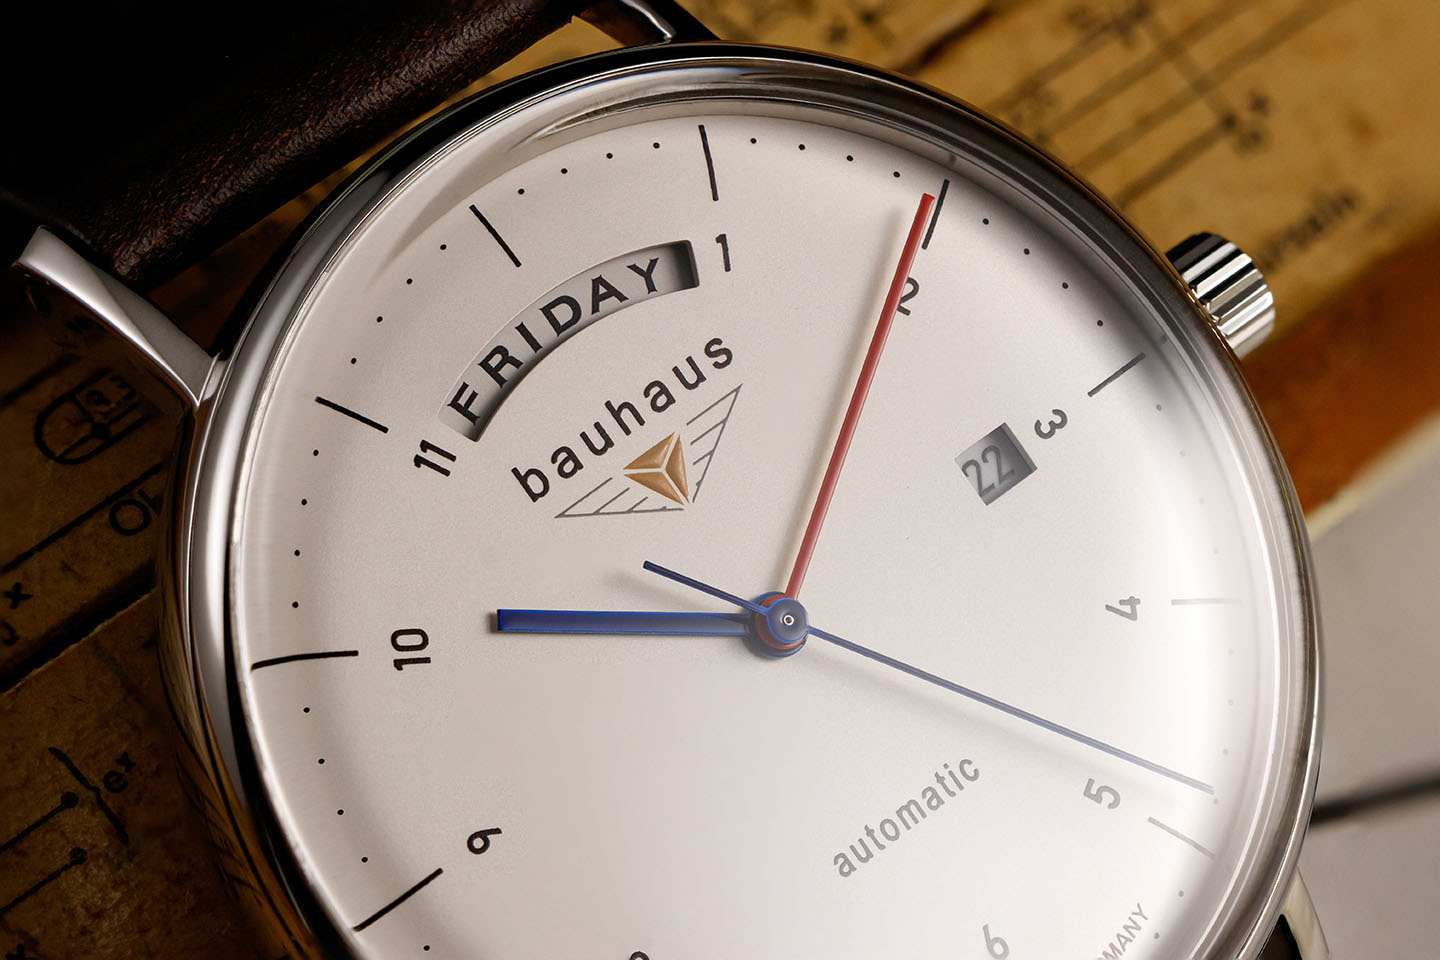 Watches Miyota | | 21 Bauhaus bauhaus Germany - Bauhaus wr in Kal. All | Jewels, Automatik Made Men 5atm 41mm, DayDate Steelcase | Watches HAU, | Classic 8285 Shop